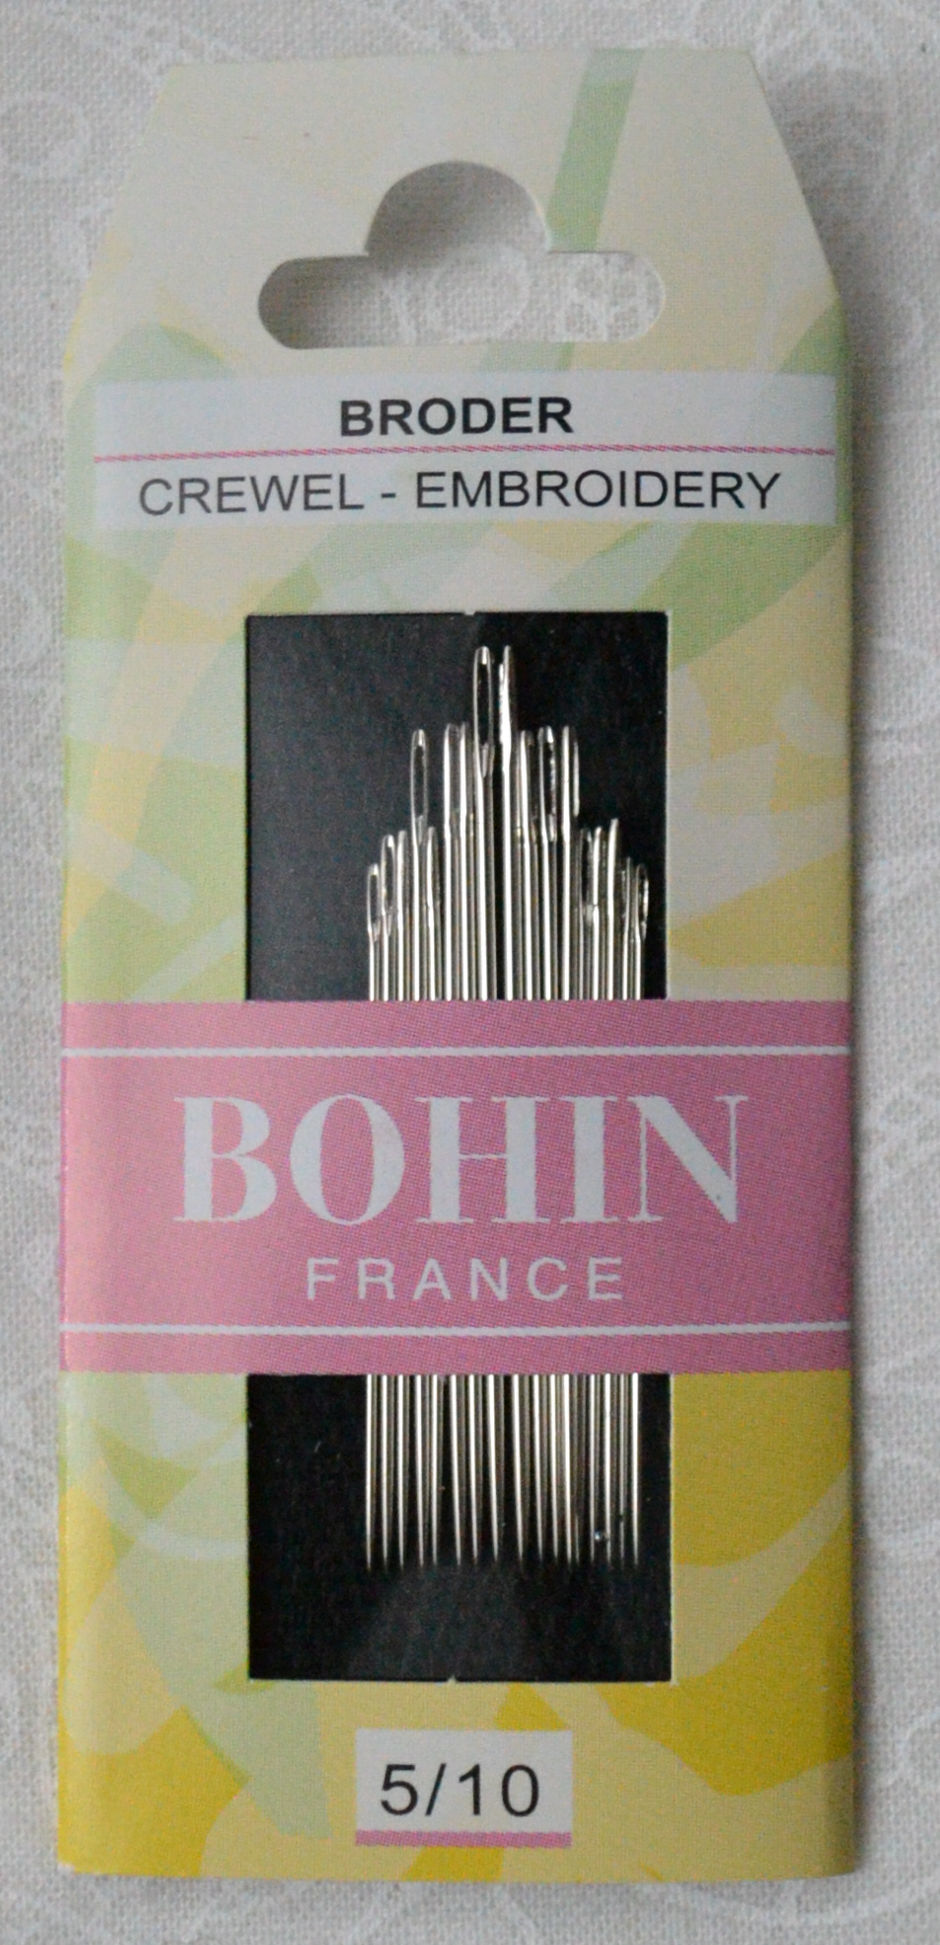 Bohin Embroidery/Crewel Stitching Needles